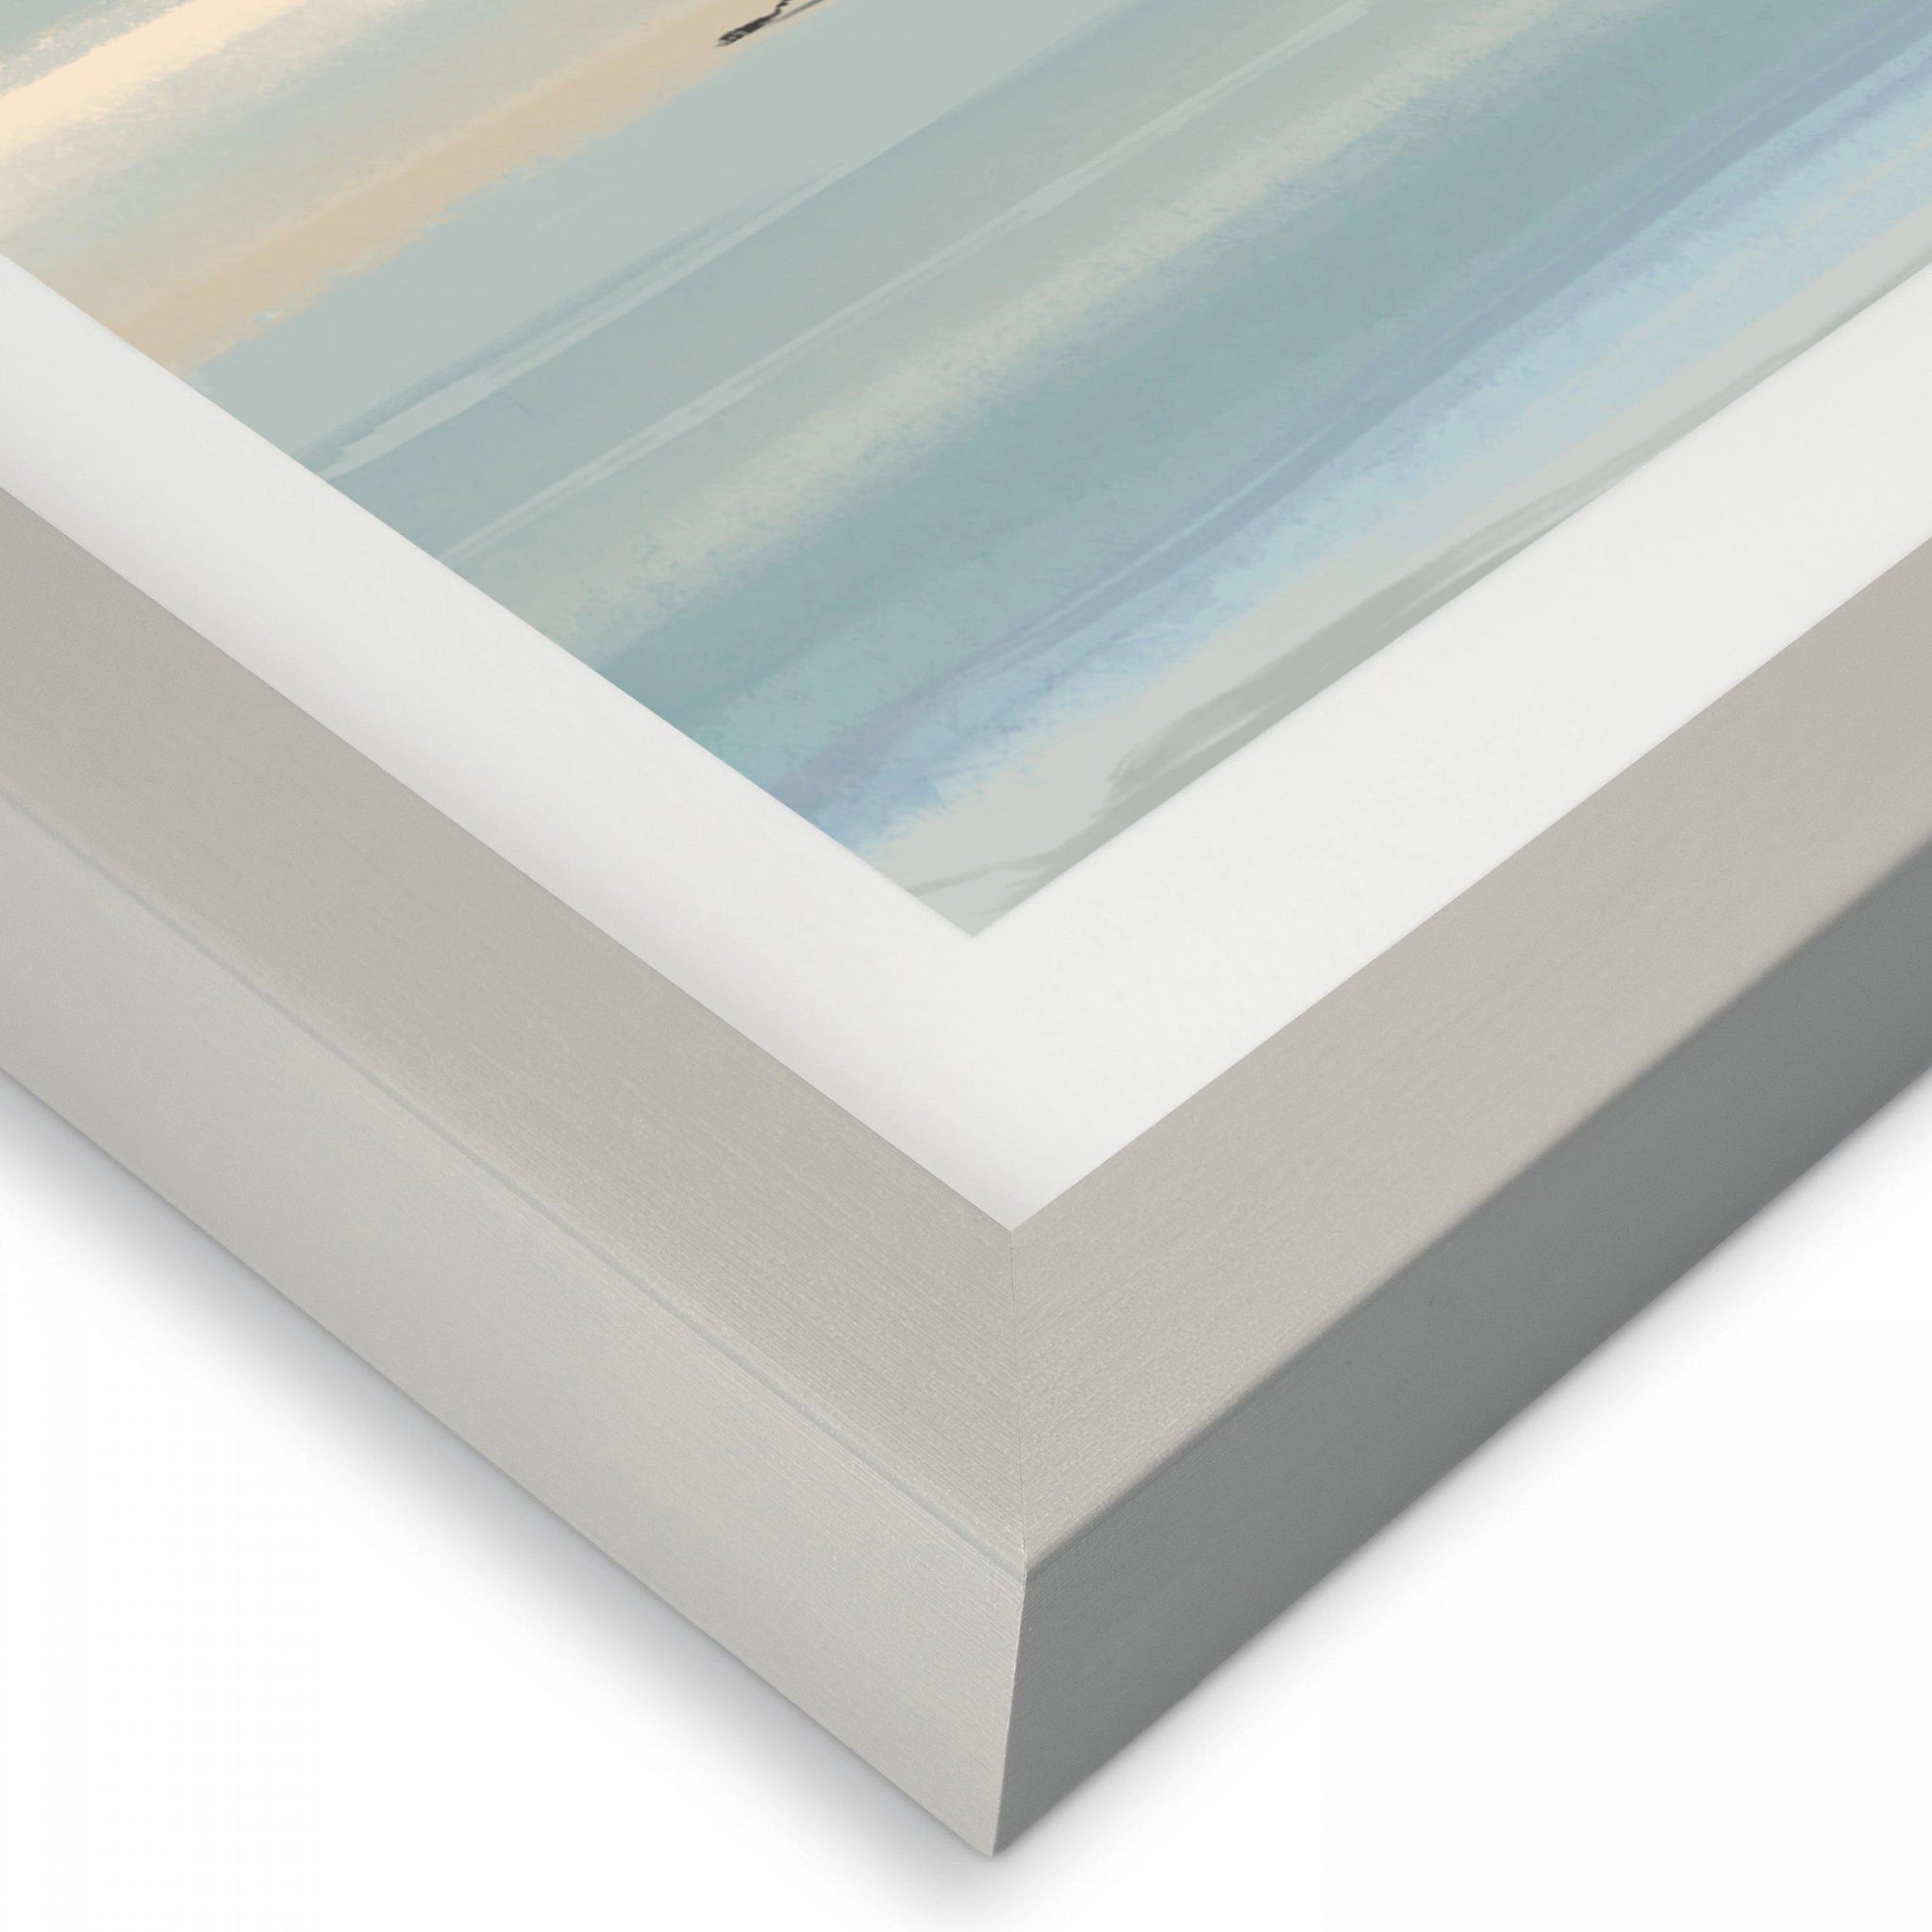 Bottom corner of a seaside print showing the simple modern grey frame.